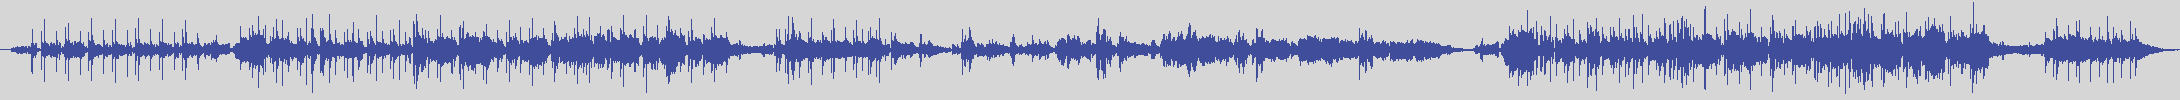 digiphonic_records [DPR003] Nino D'Angelo - Si Turnasse Addu Me [Original Mix] audio wave form